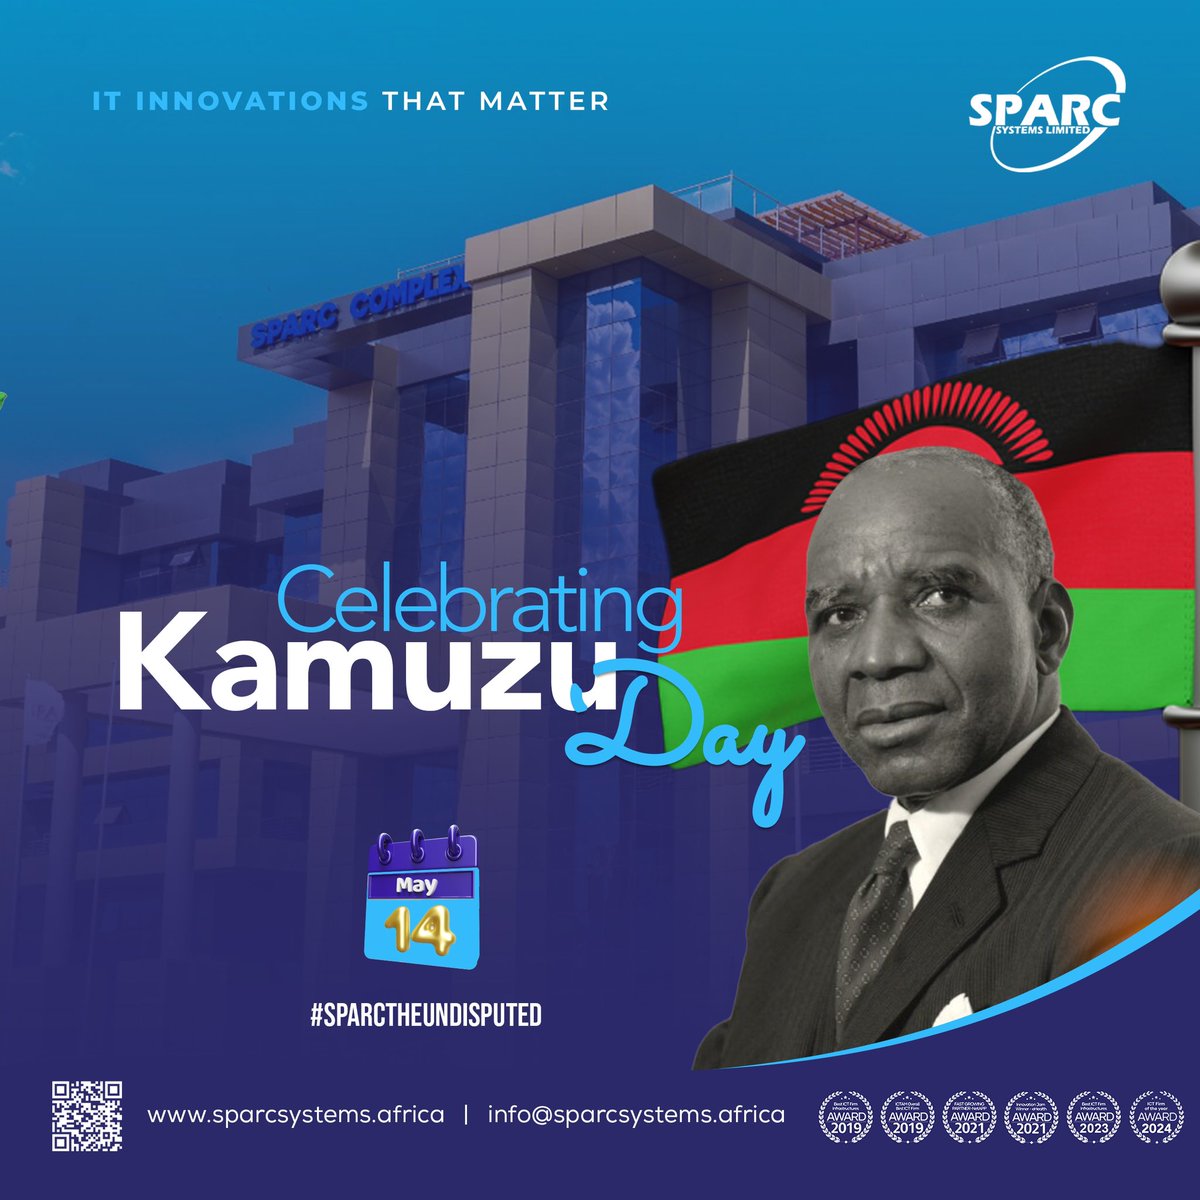 Remembering Hastings Kamuzu Banda, a trailblazer in African history! May his innovative spirit & leadership inspire us to revolutionize Malawi's tech scene #KamuzuDay #ITCompany #SparcTheUndisputed